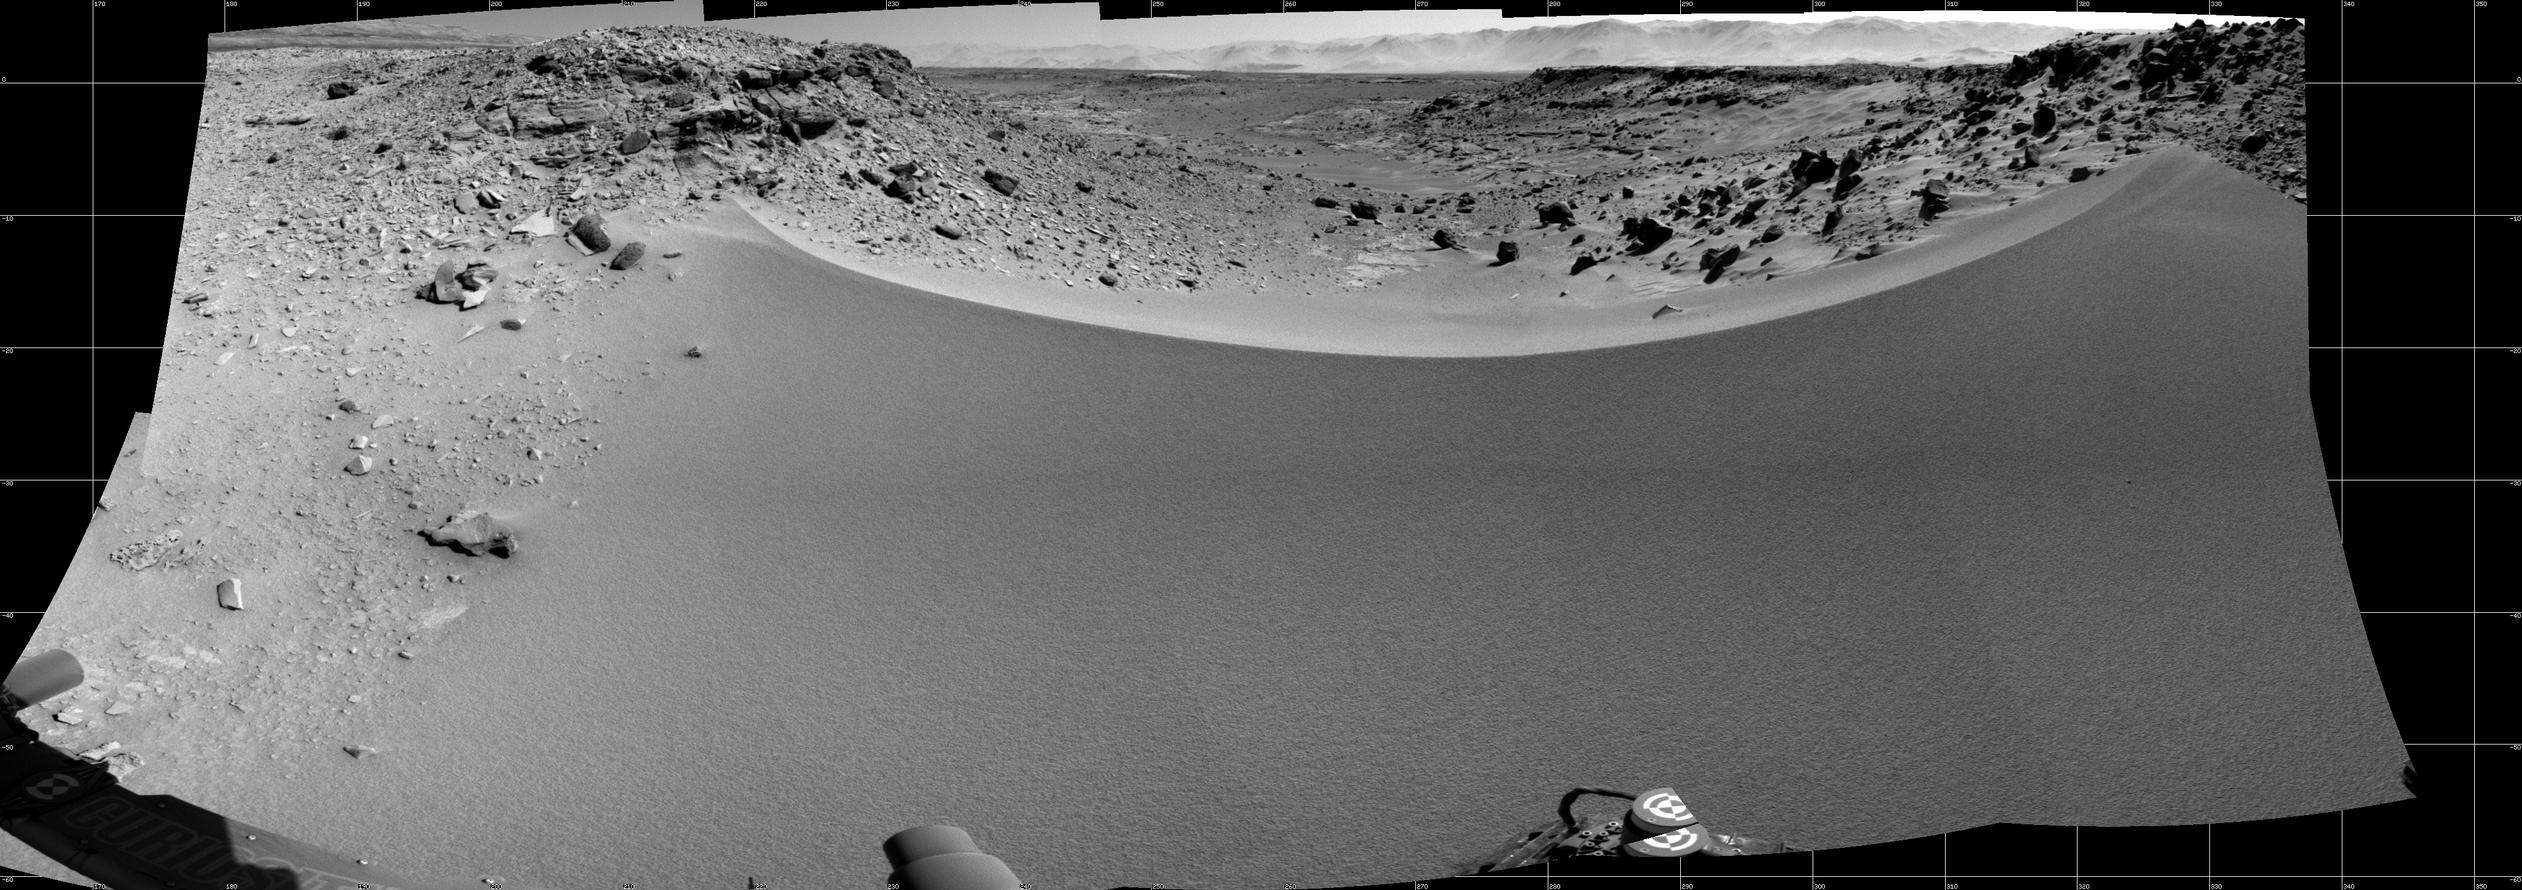 Curiosity's View Past Dune at 'Dingo Gap'